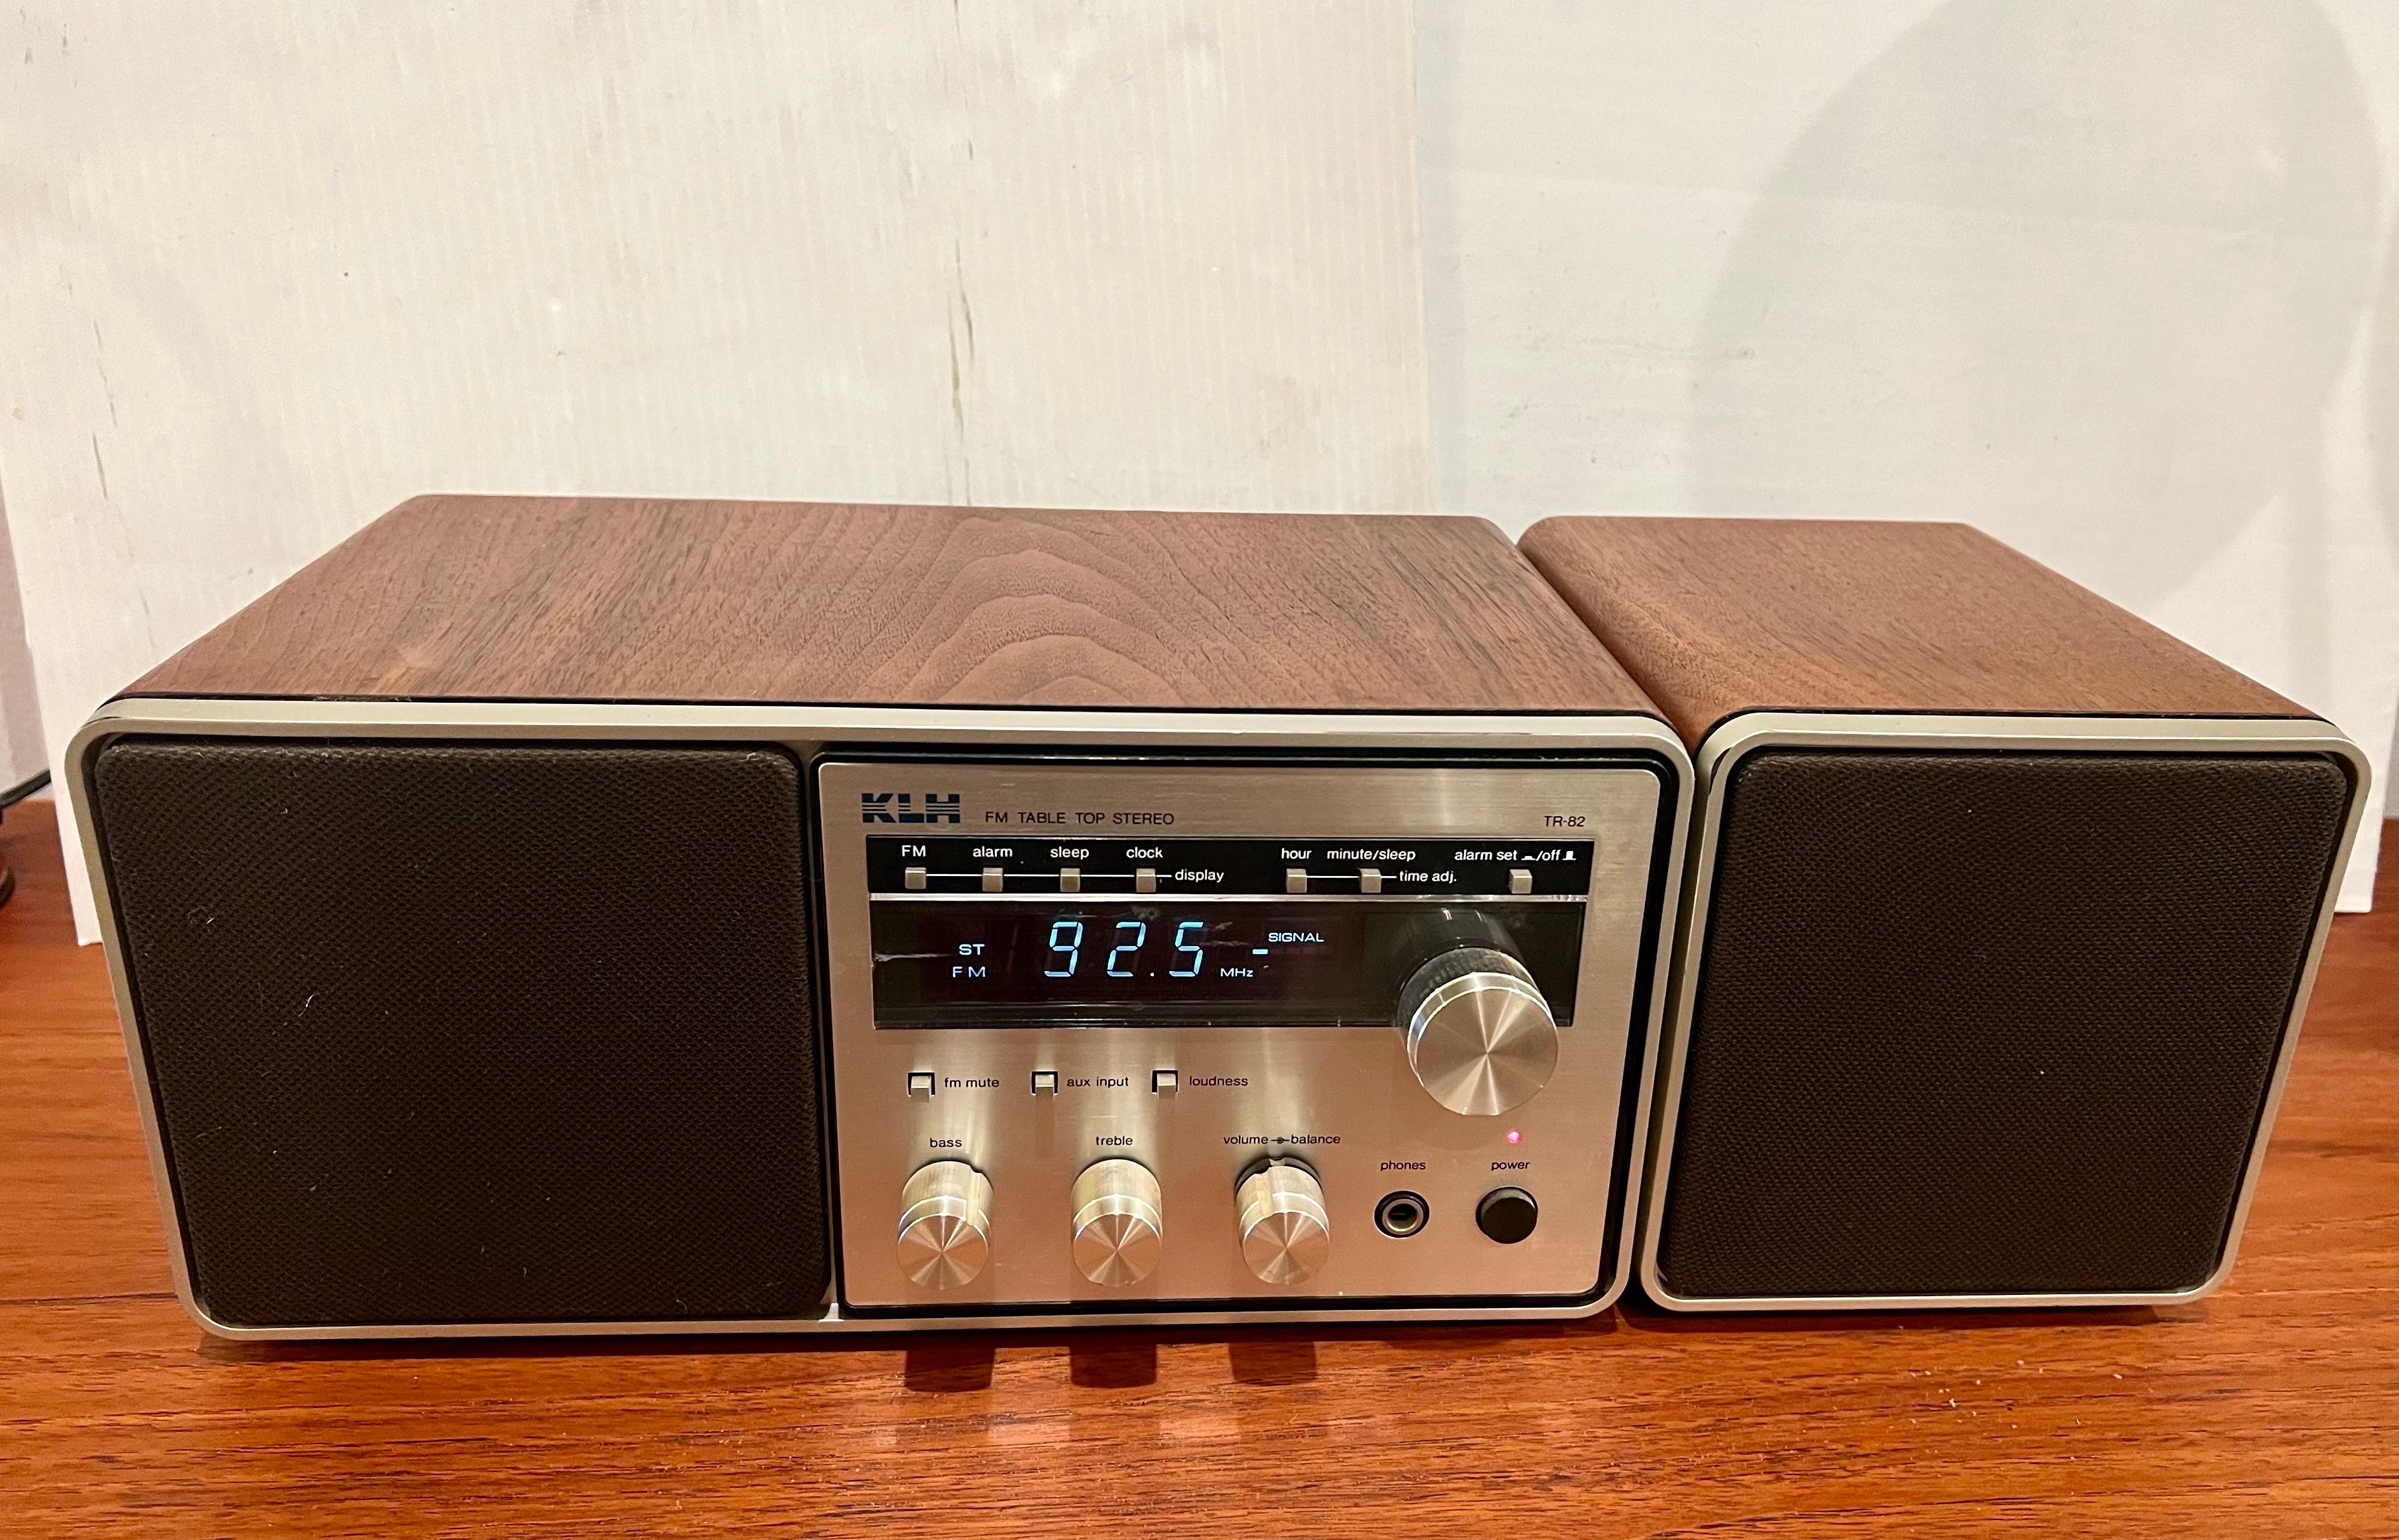 1980s clock radio